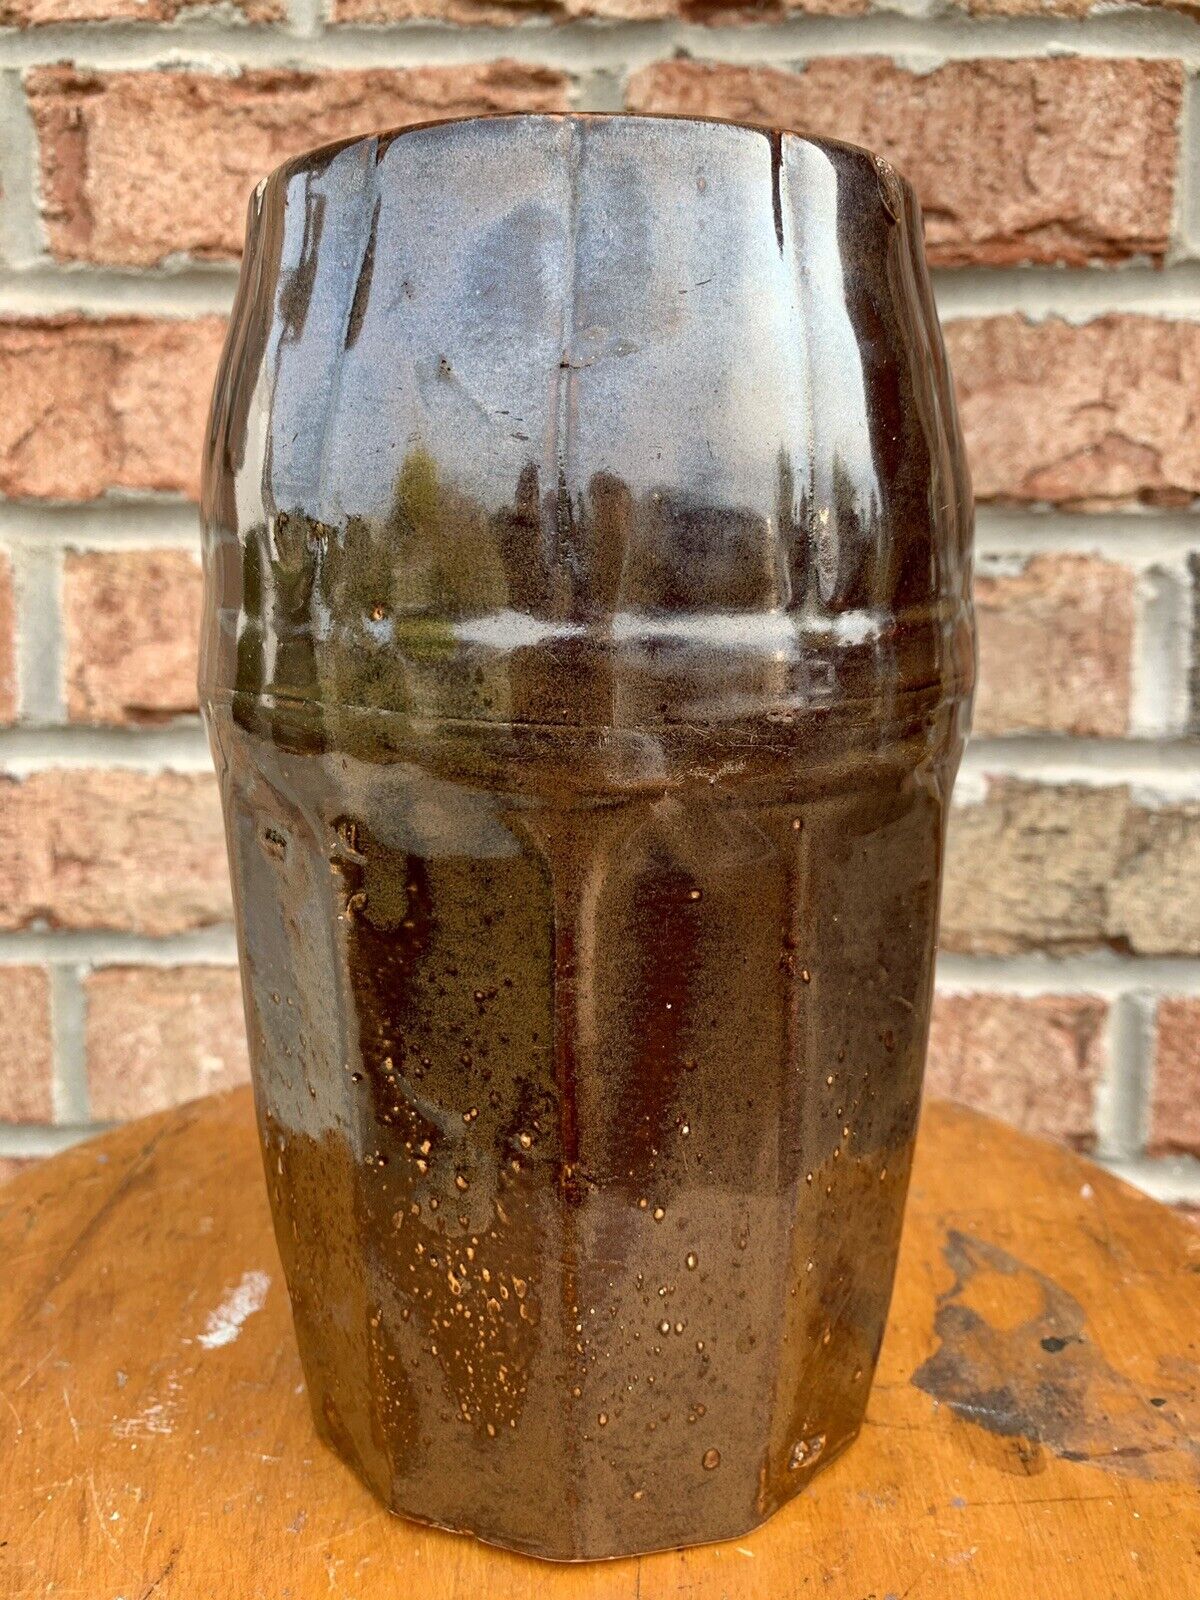 Antique Peoria Pottery Brown Glazed Stoneware Vase